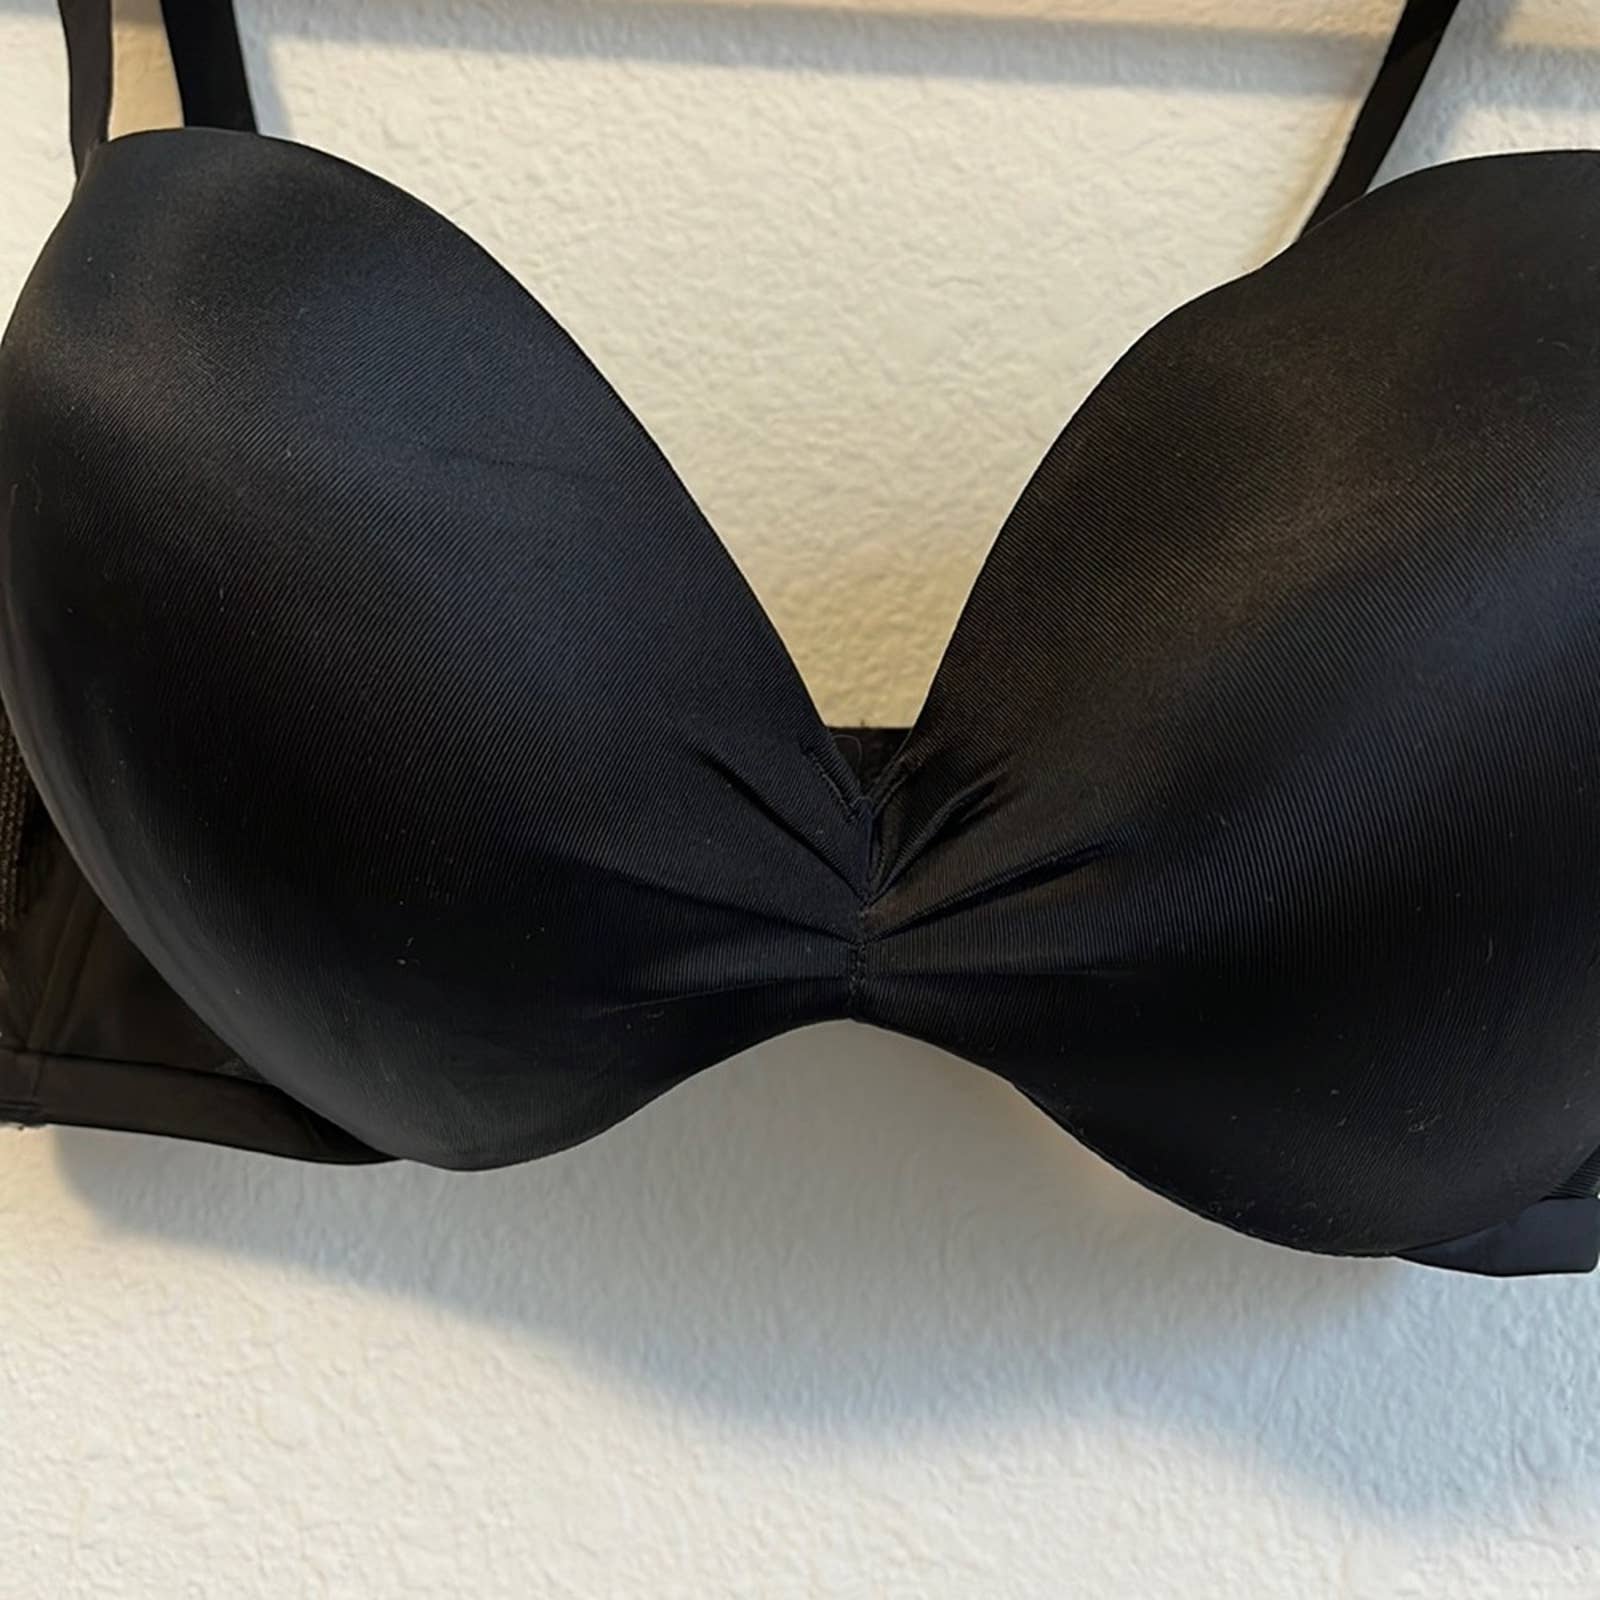 Boost Plunge Bra, Description: Gray and black boost plunge bra from  Cacique, size 42B.